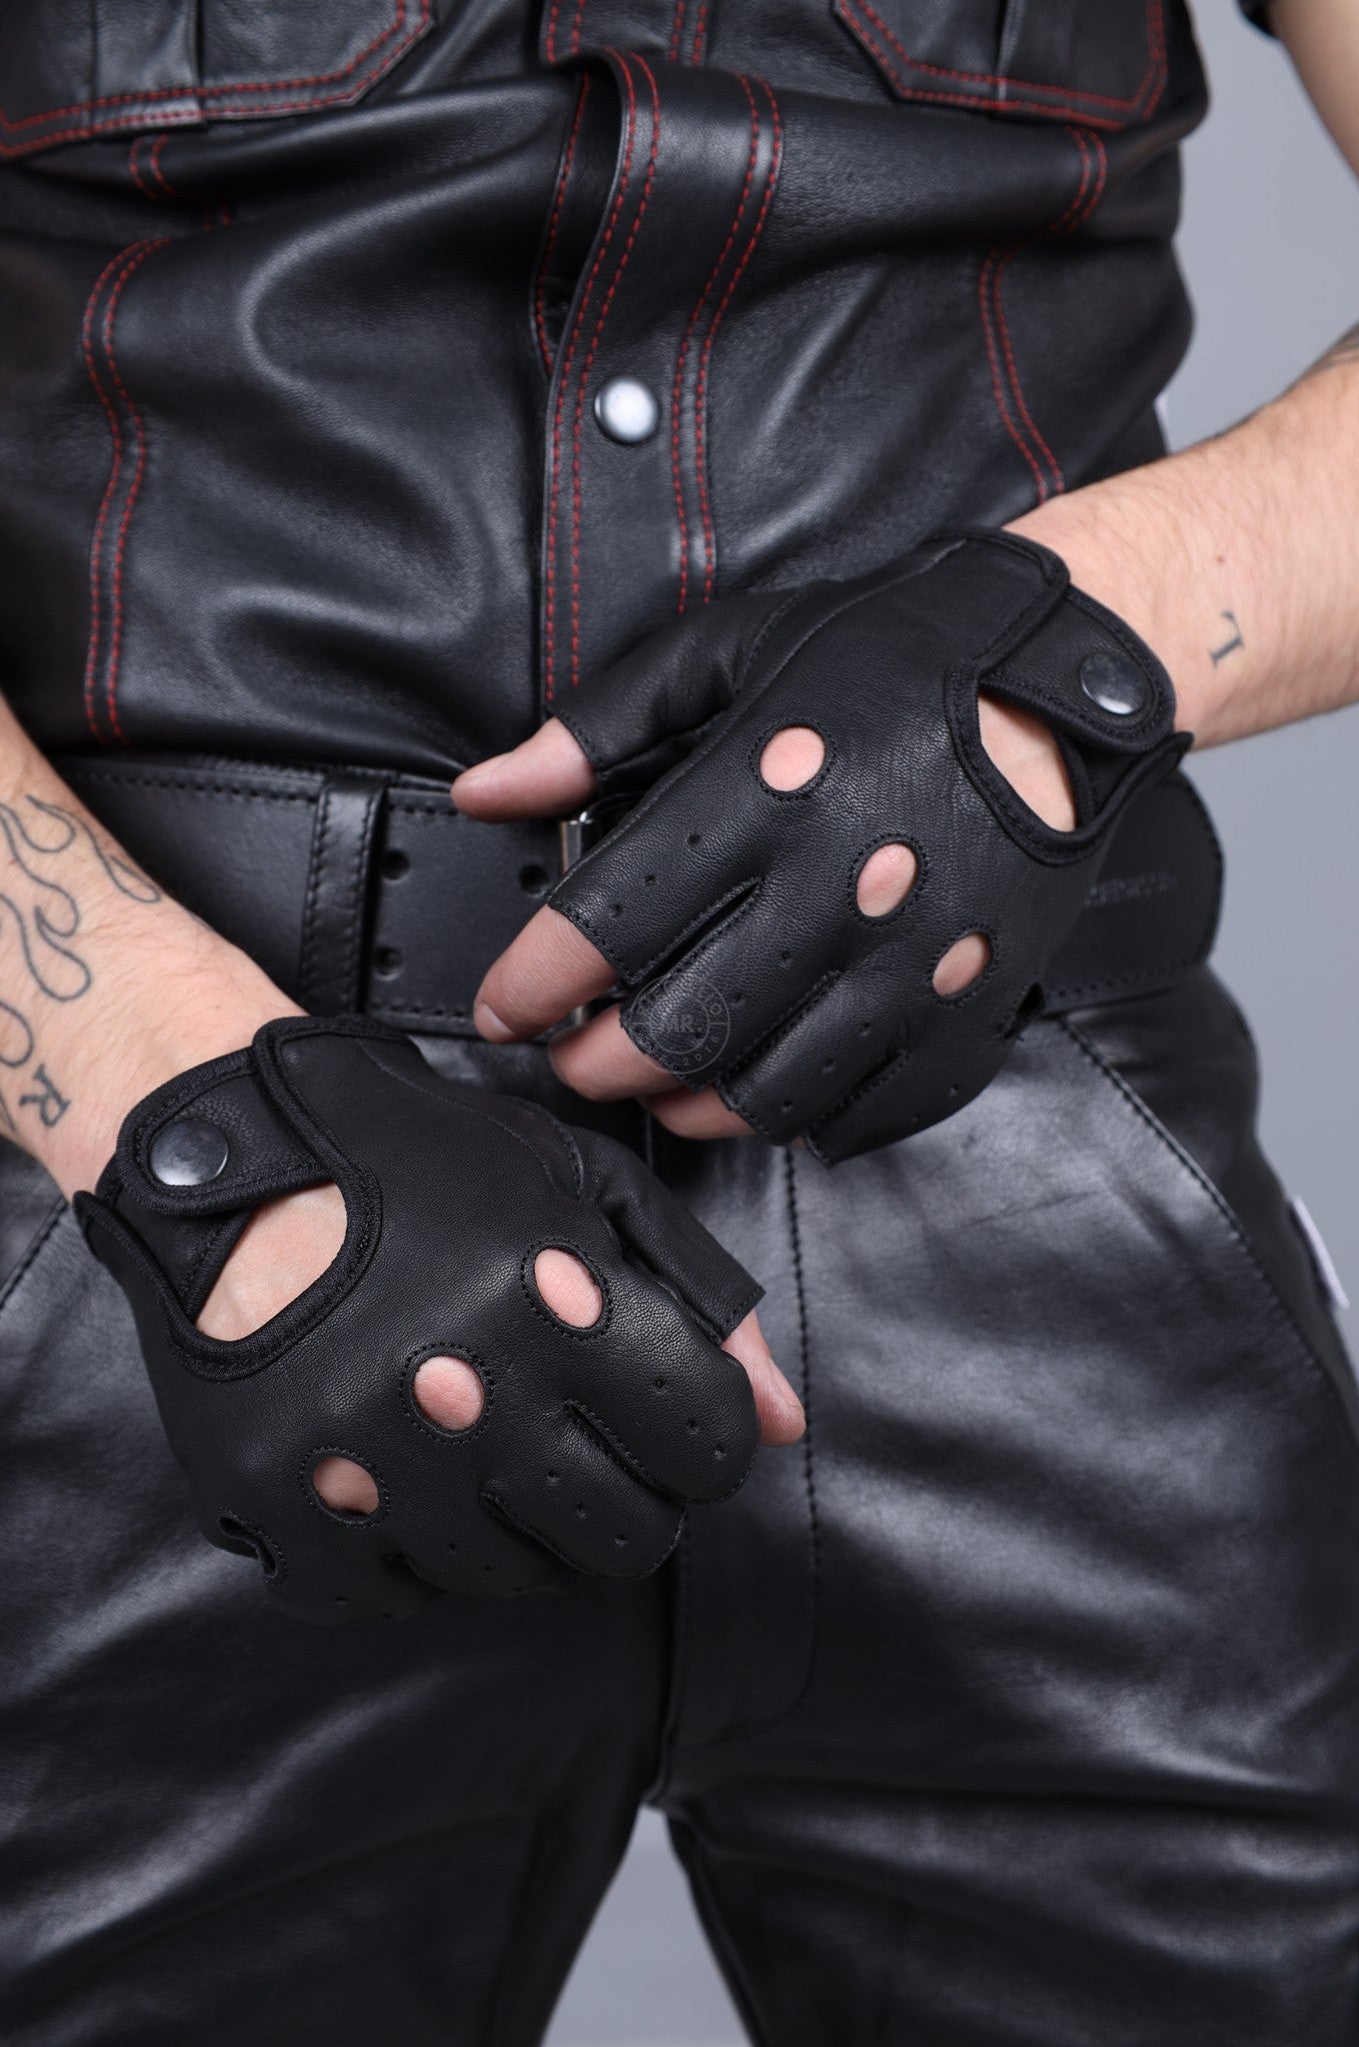 Black Leather Fingerless Gloves at MR. Riegillio